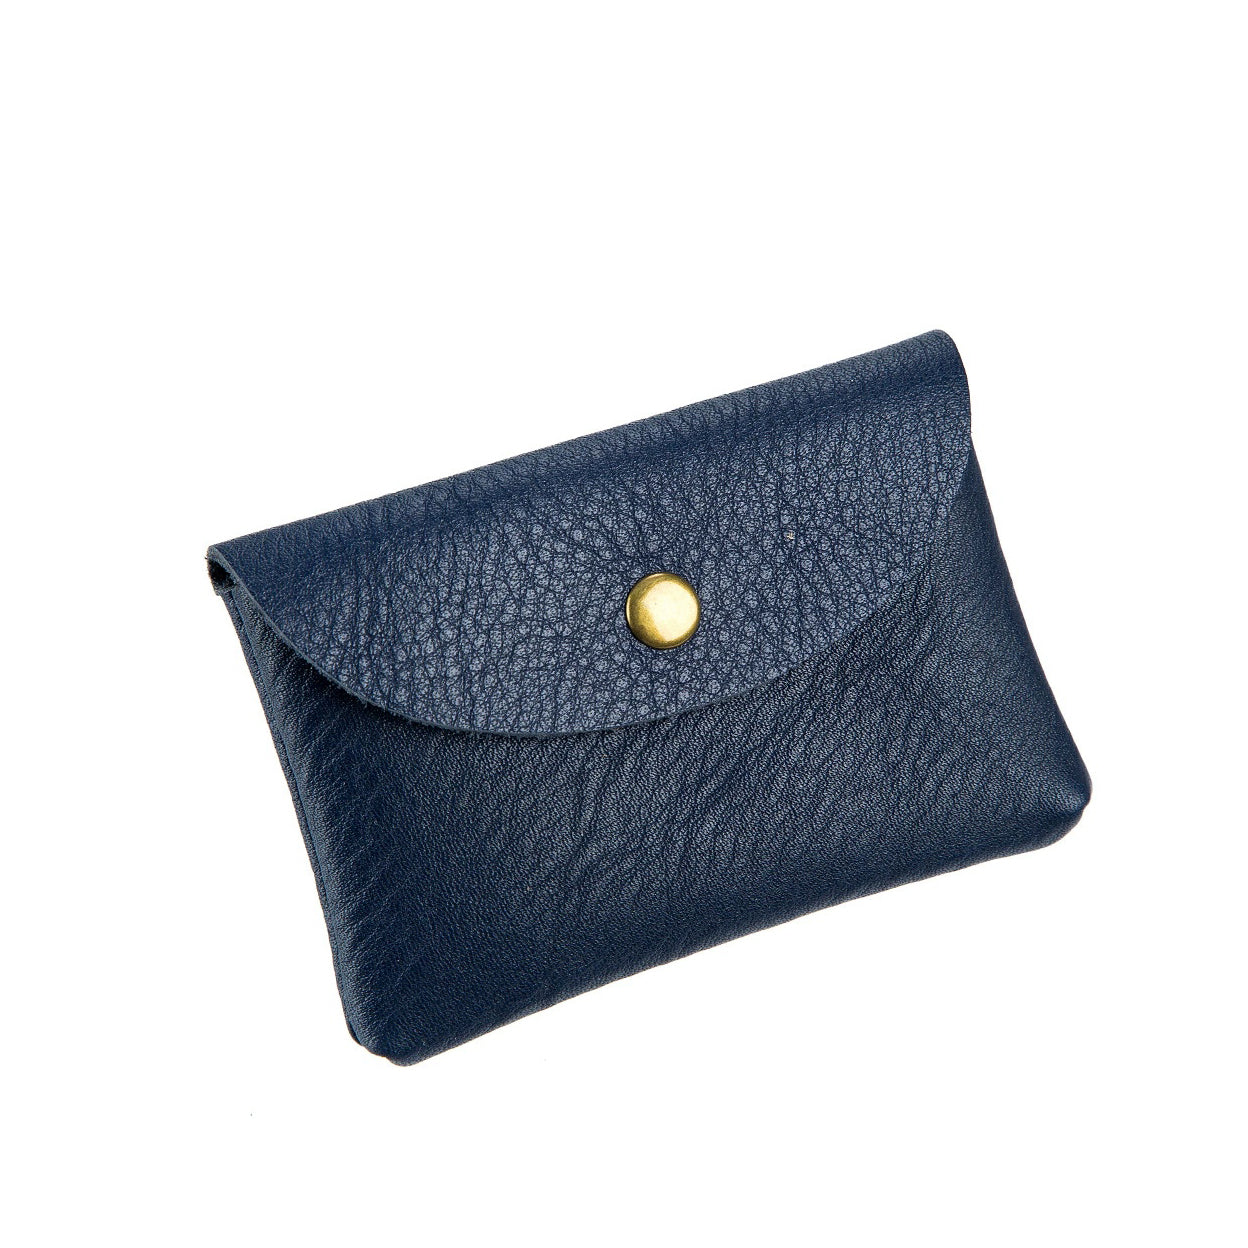 Women's and Men's unisex cowhide leather pouch envelope design